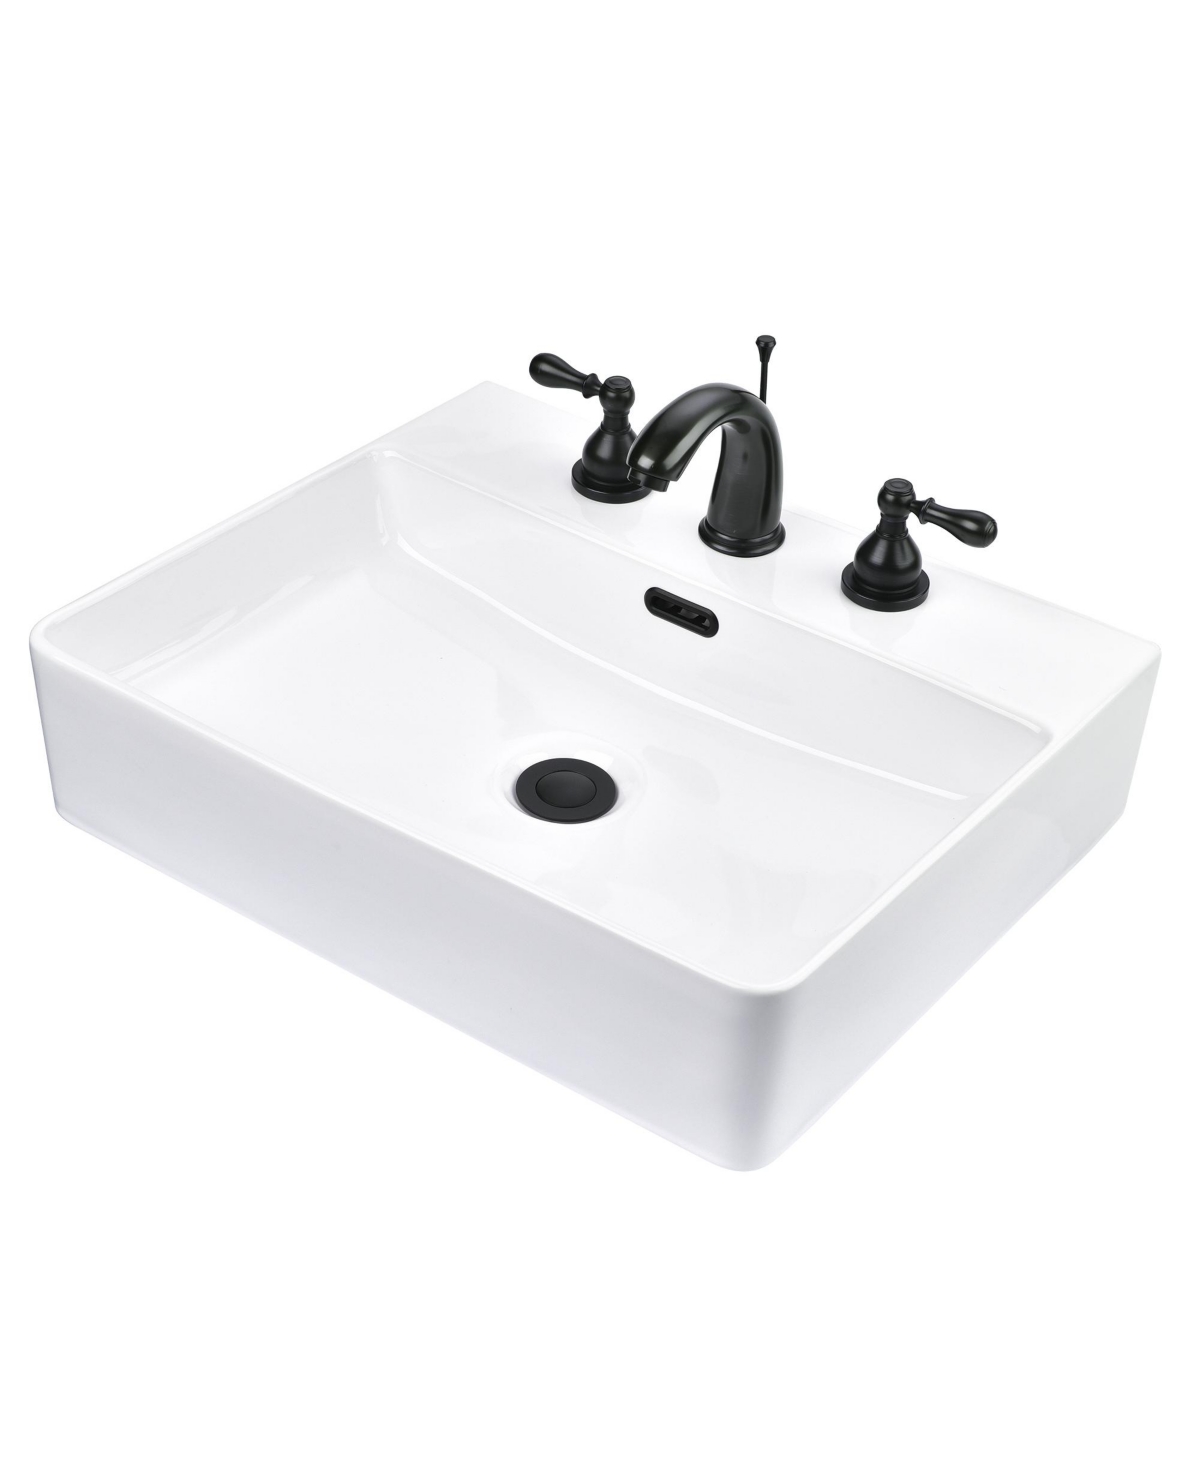 Rectangle Bathroom Basin Ceramic Countertop Sink with Faucet Drain - Natural